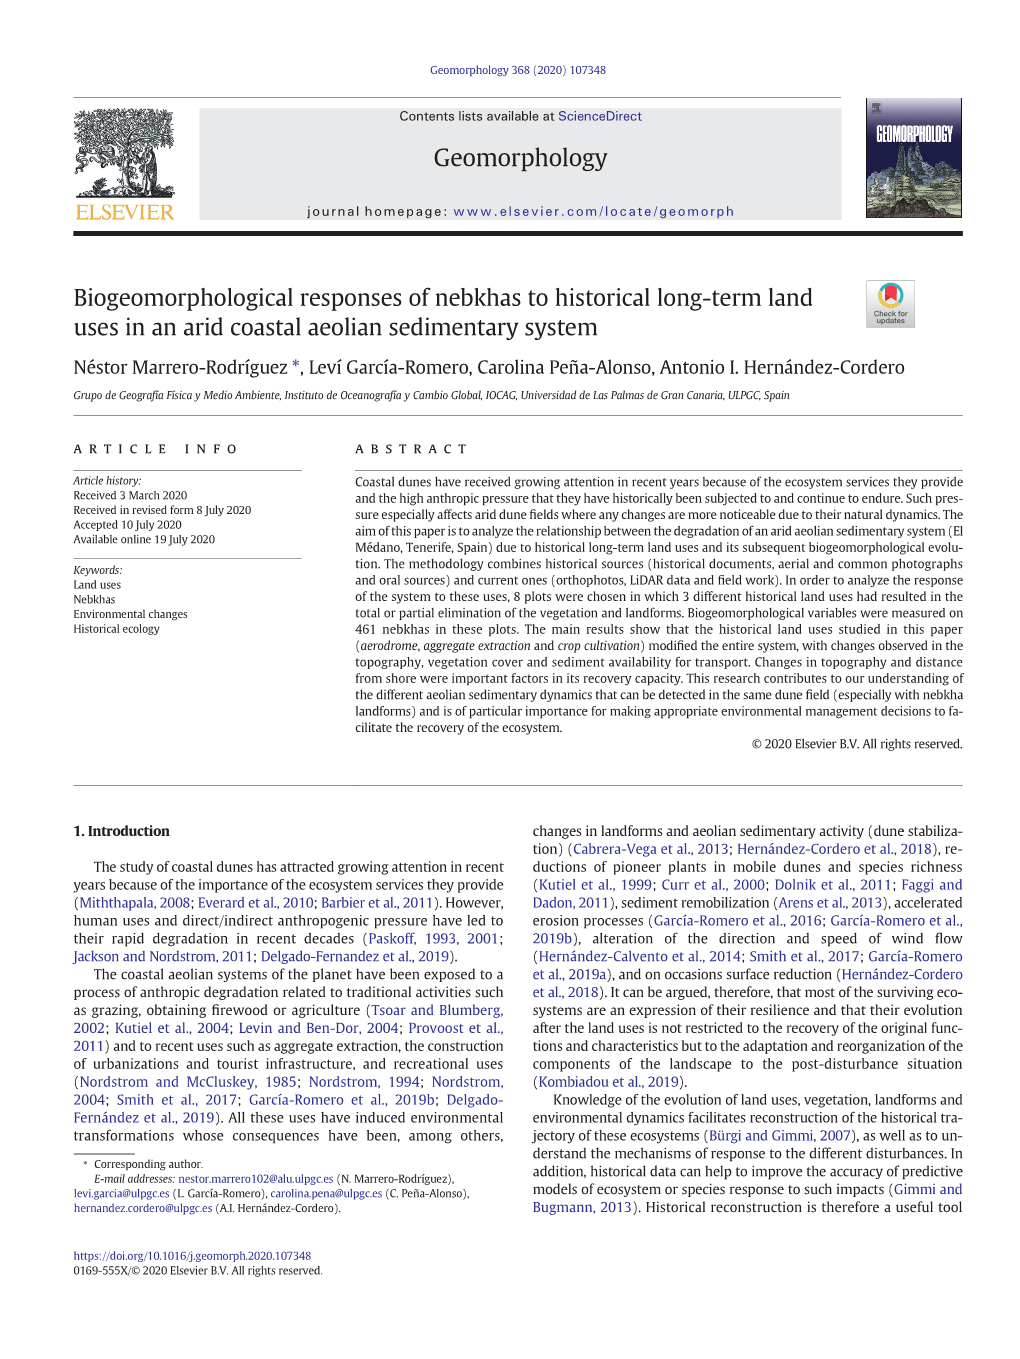 Biogeomorphological Responses of Nebkhas to Historical Long-Term Land Uses in an Arid Coastal Aeolian Sedimentary System